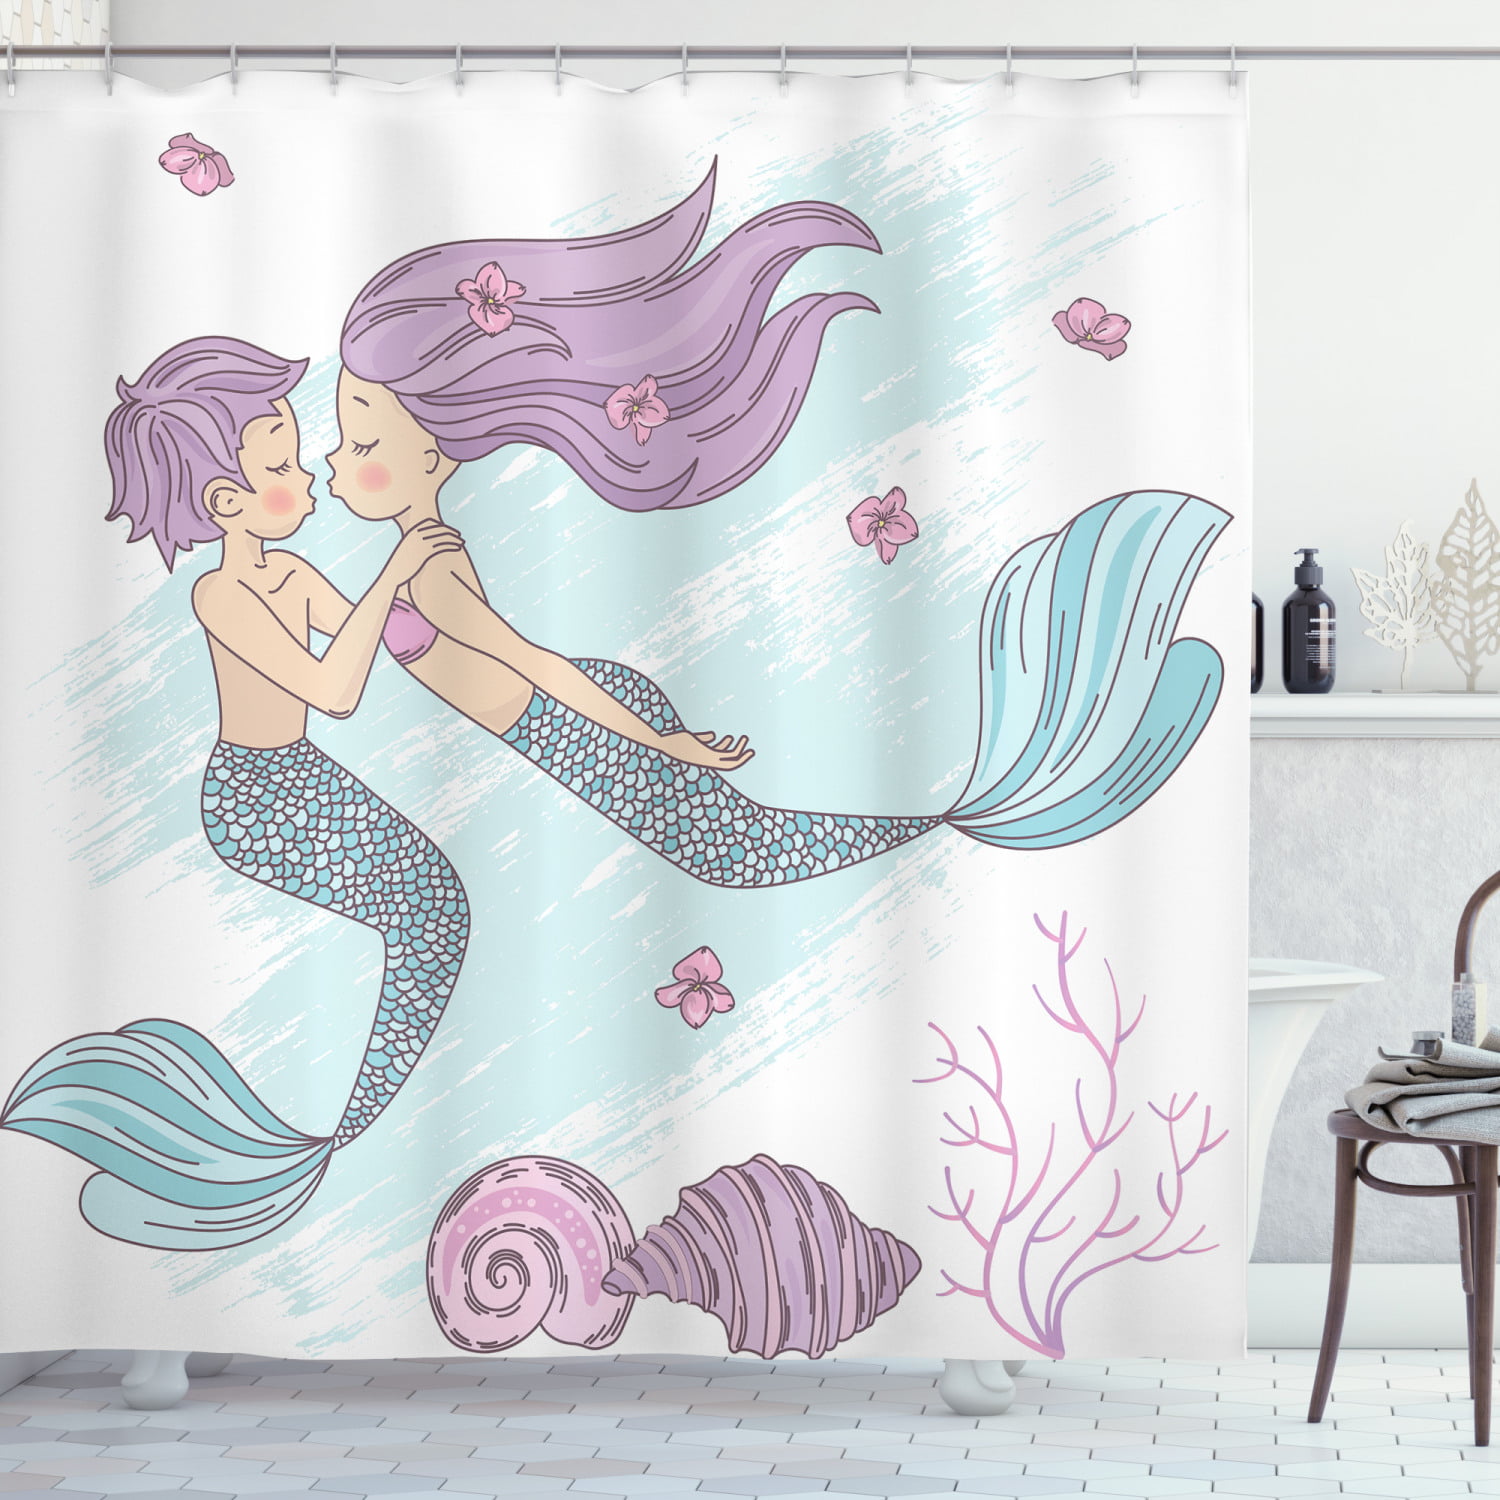 Male Mermaid and Man Shower Curtain Liner Bathroom Set Waterproof Fabric Hooks 